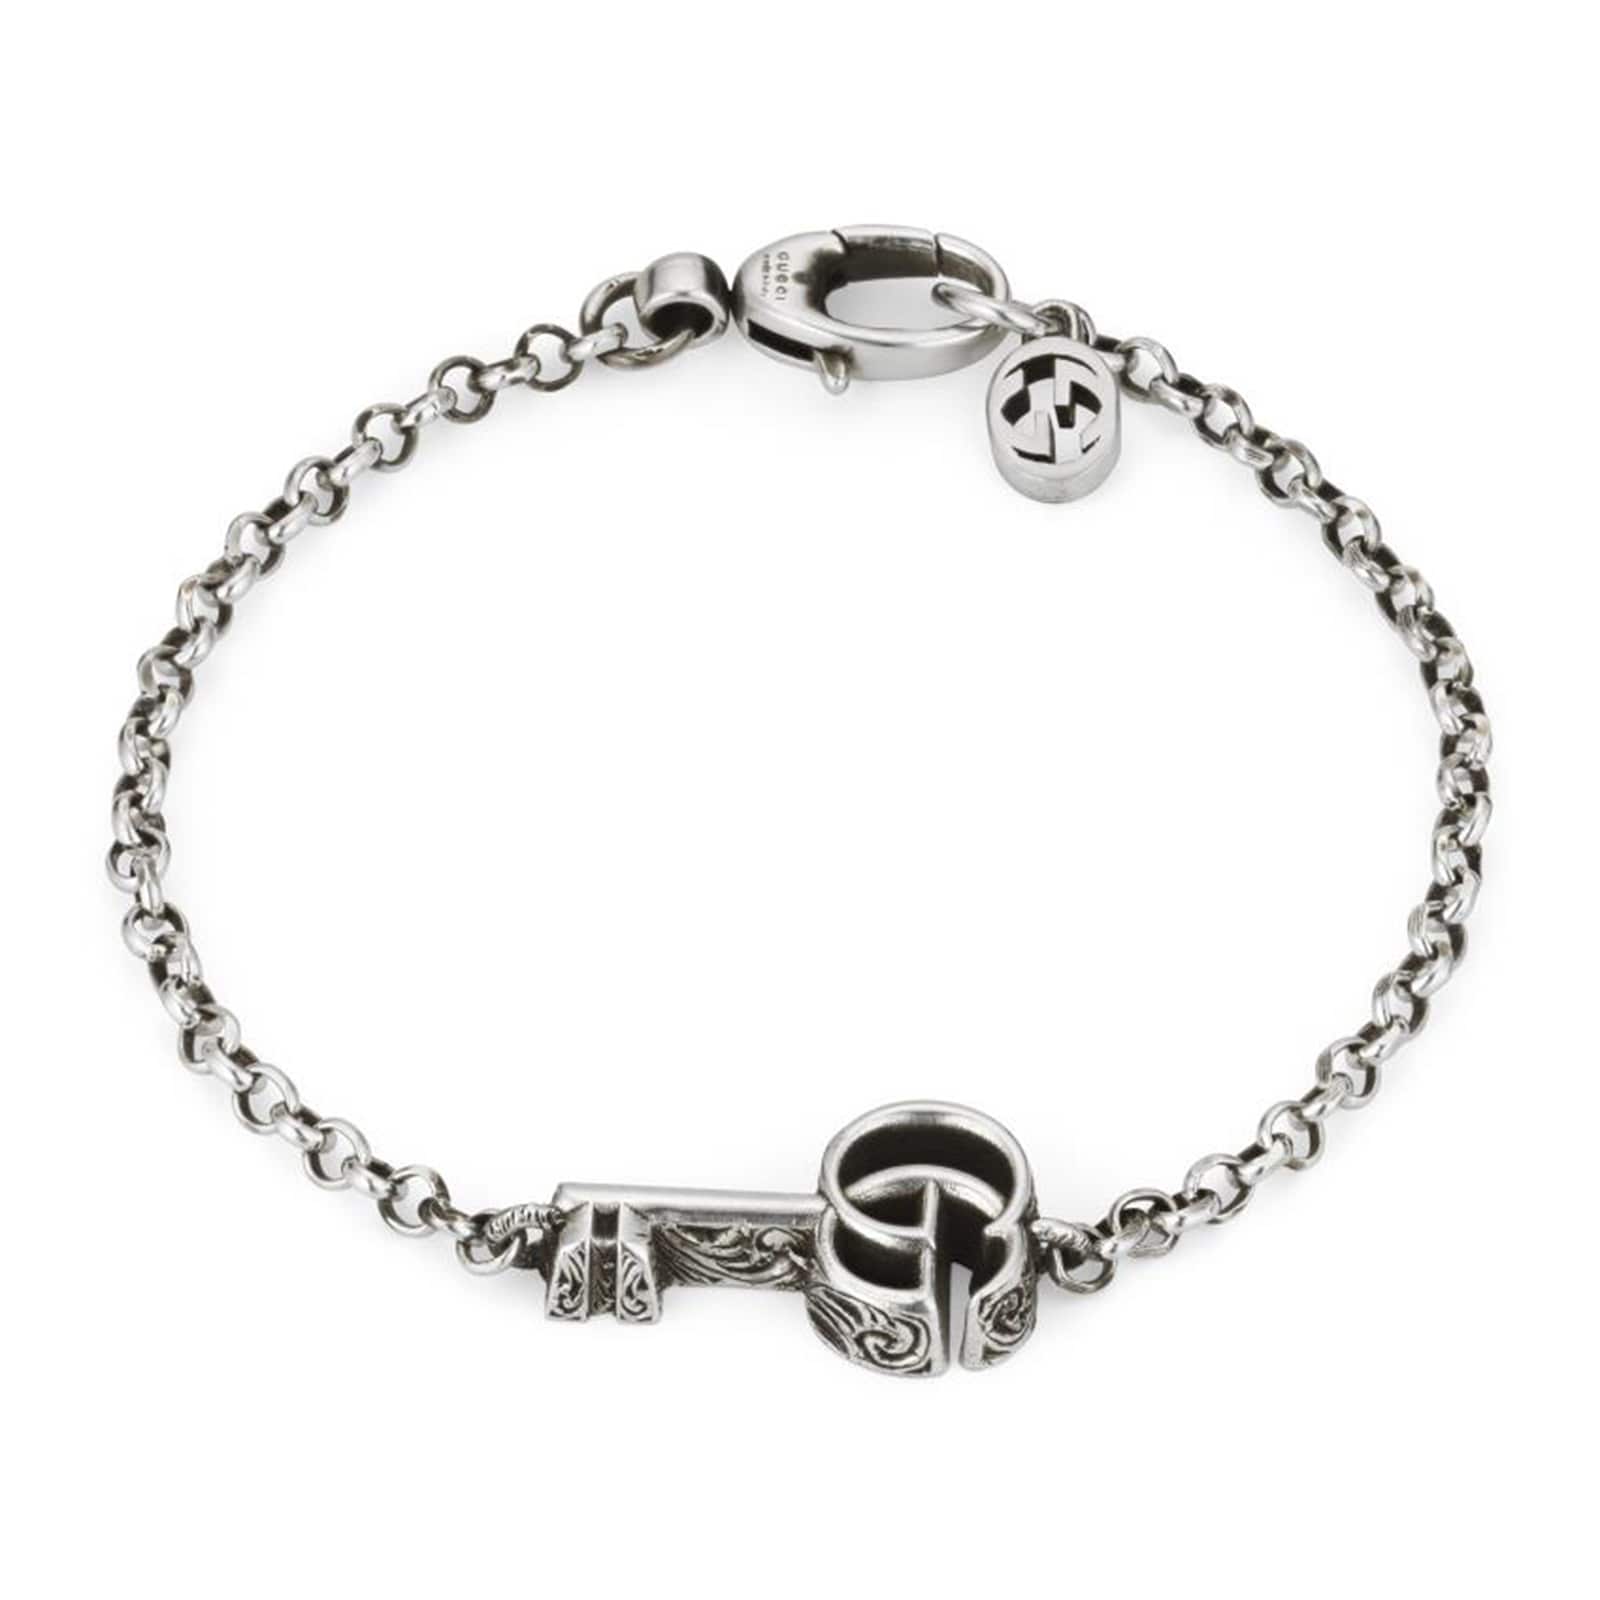 Silver Marmont Key Bracelet - 19cm